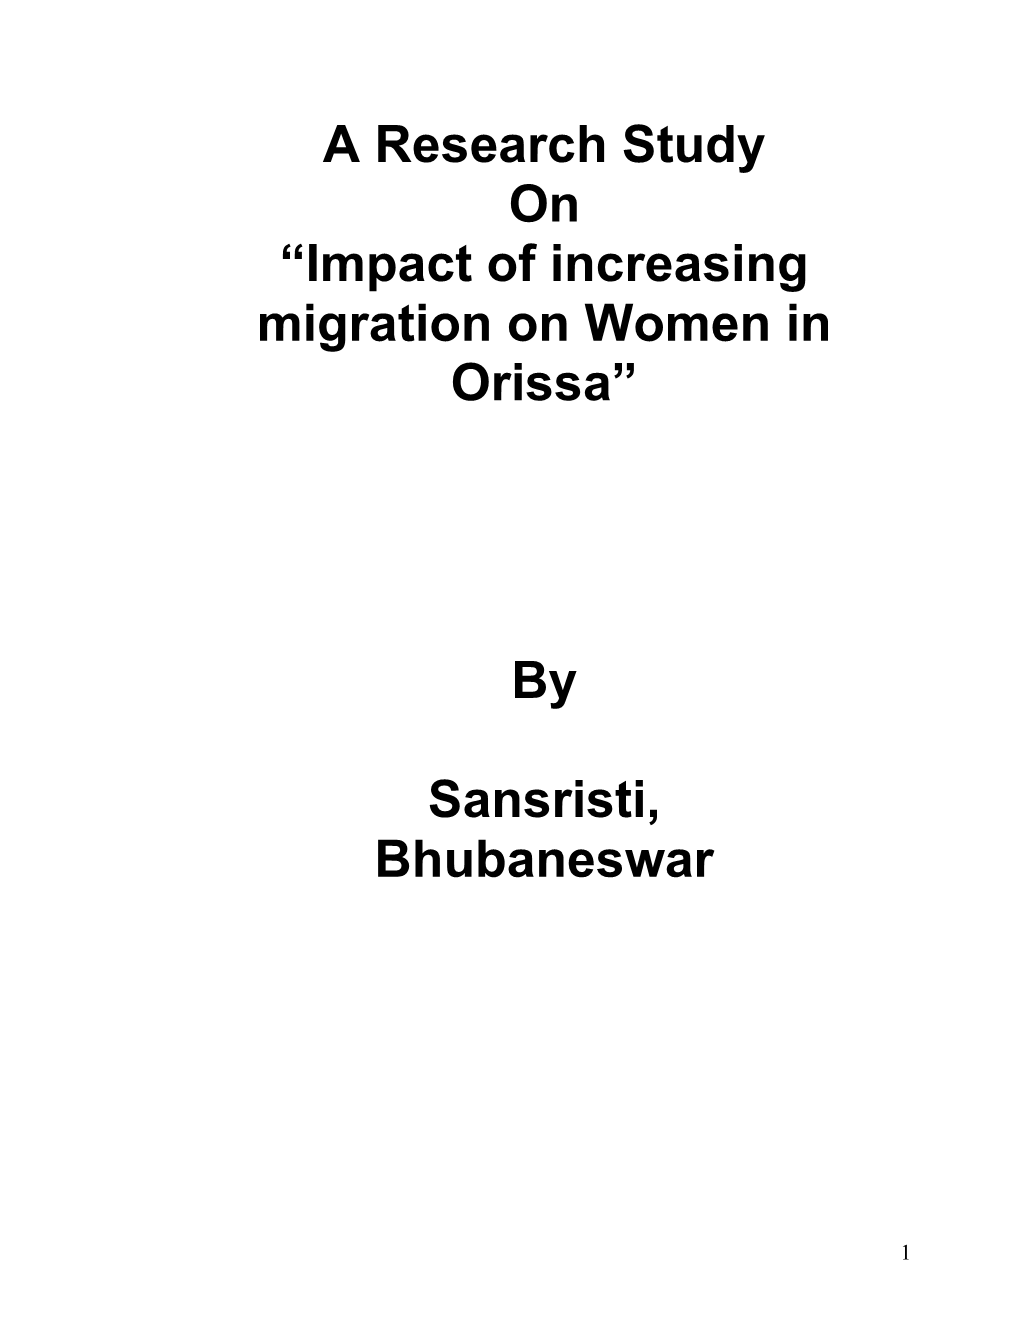 Impact of Increasing Migration on Women in Orissa”